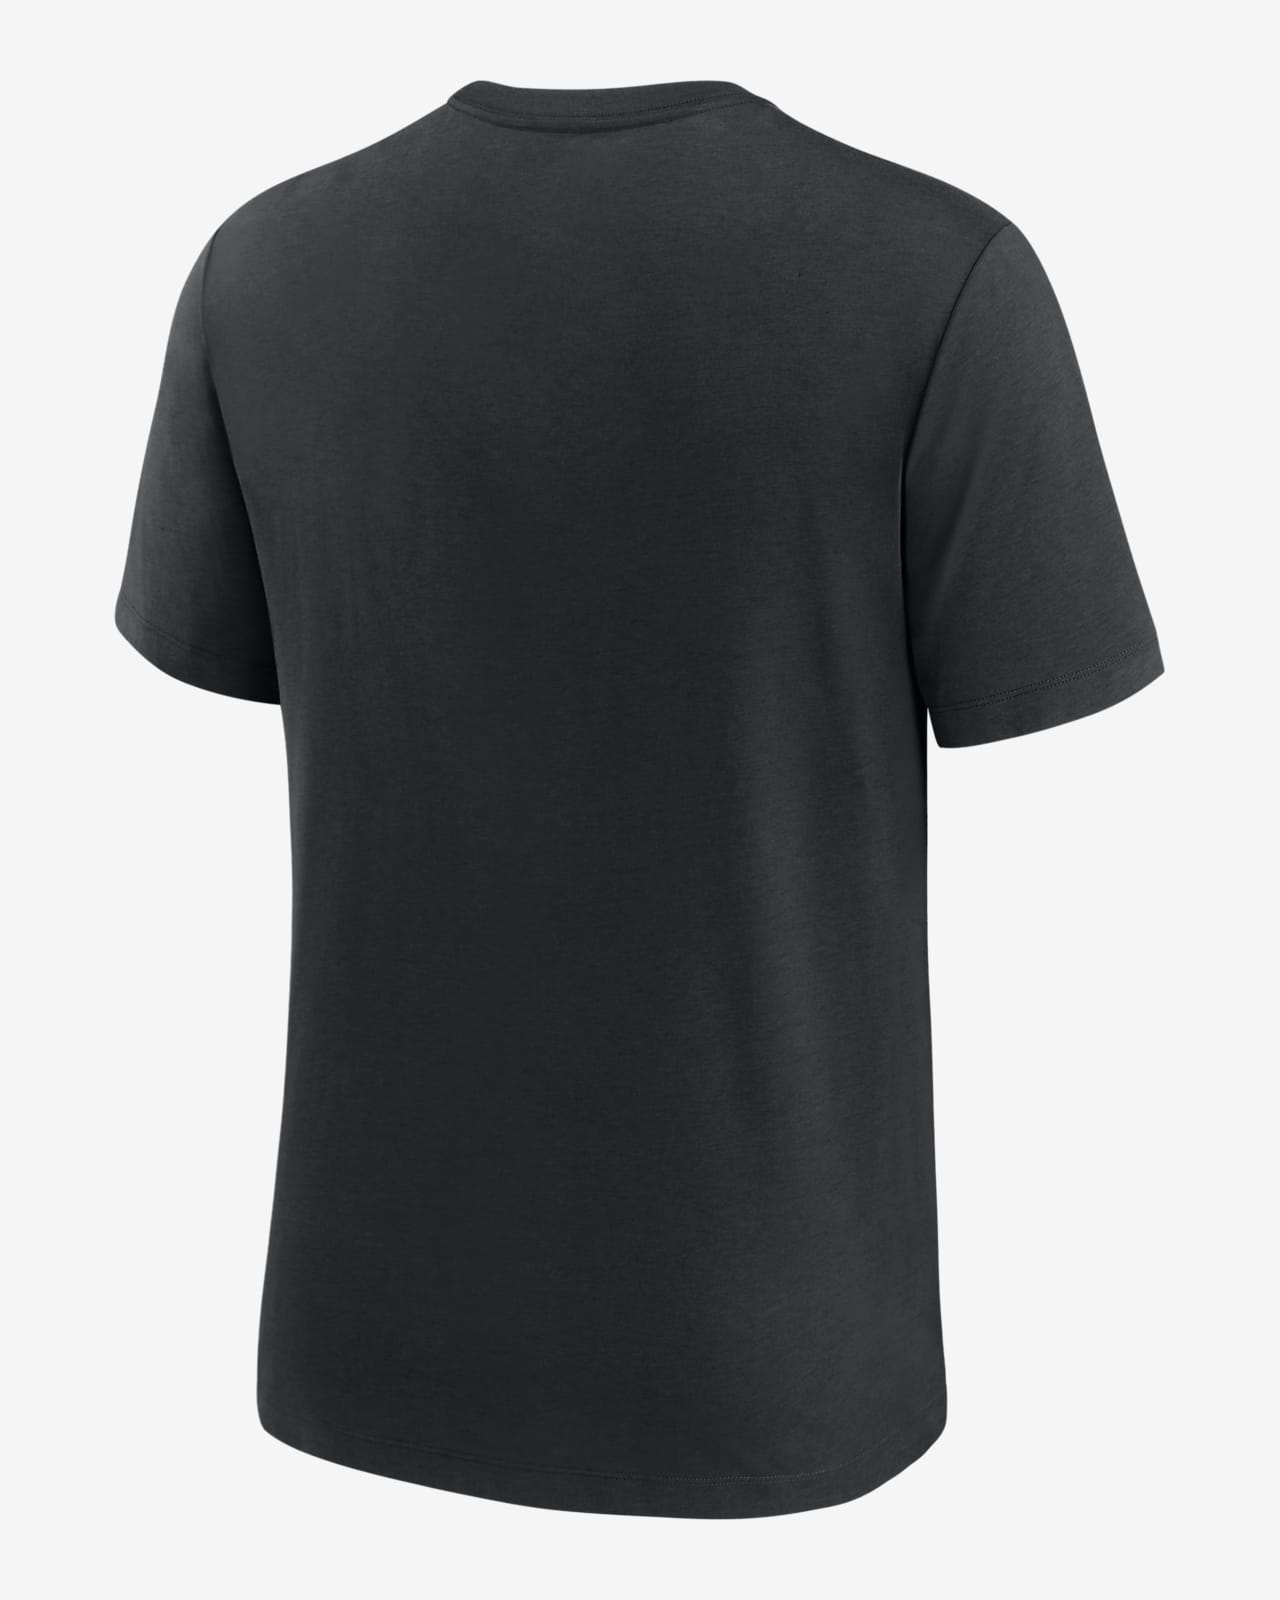 black orioles shirt